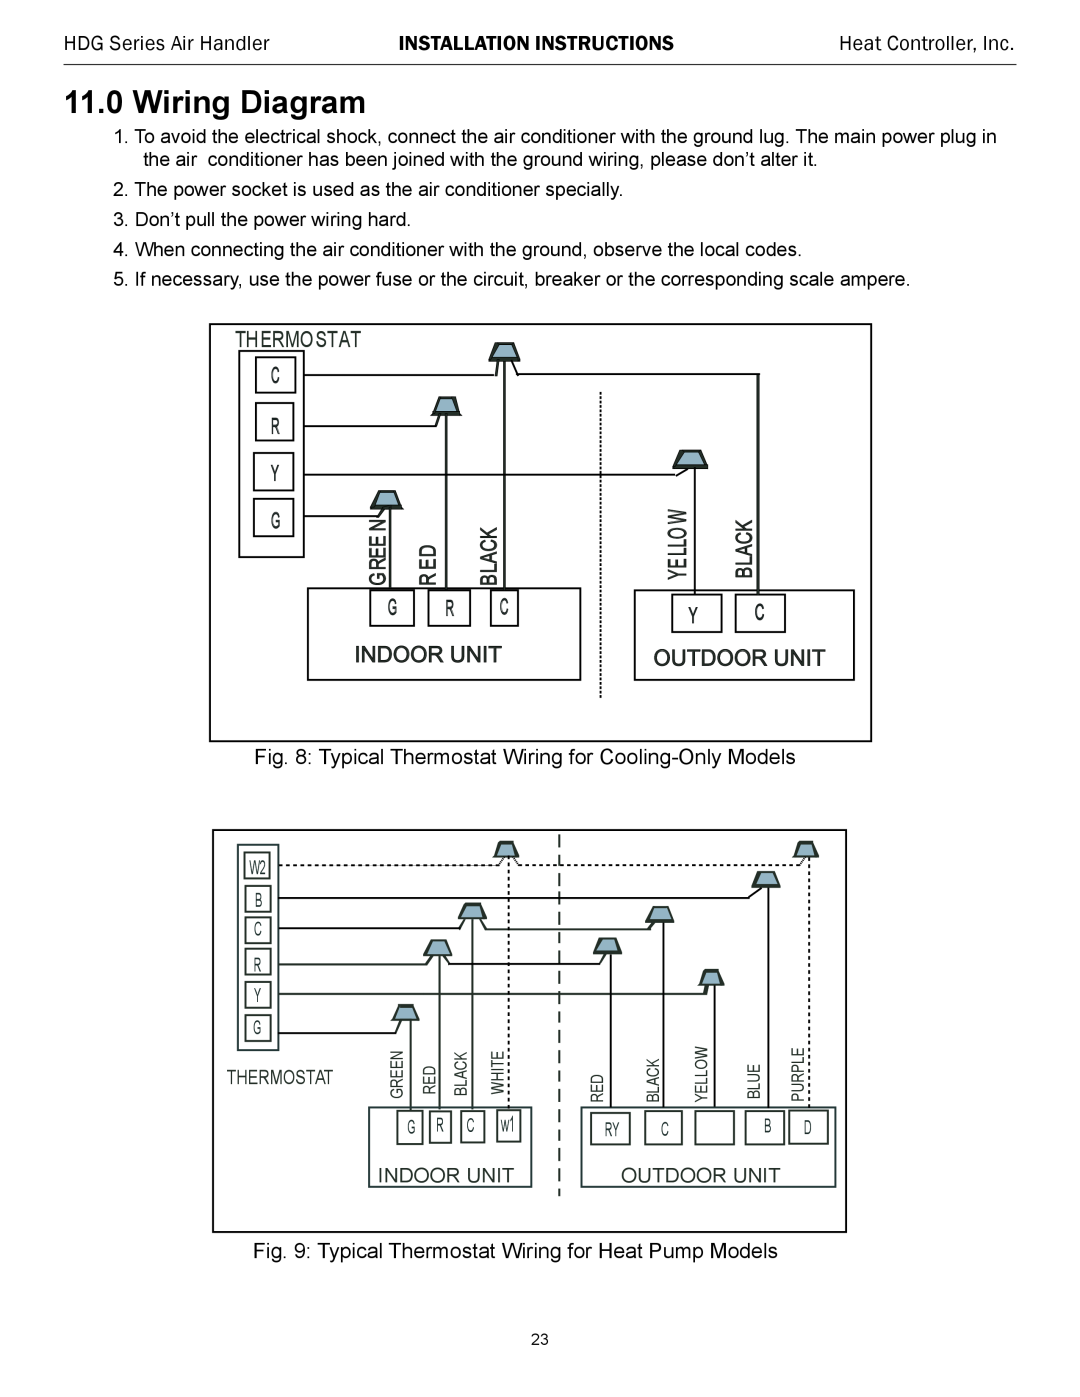 Heat Controller HDG24, HDG48, HDG60, HDG30, HDG42, HDG36 installation instructions 11.0Wiring Diagram 